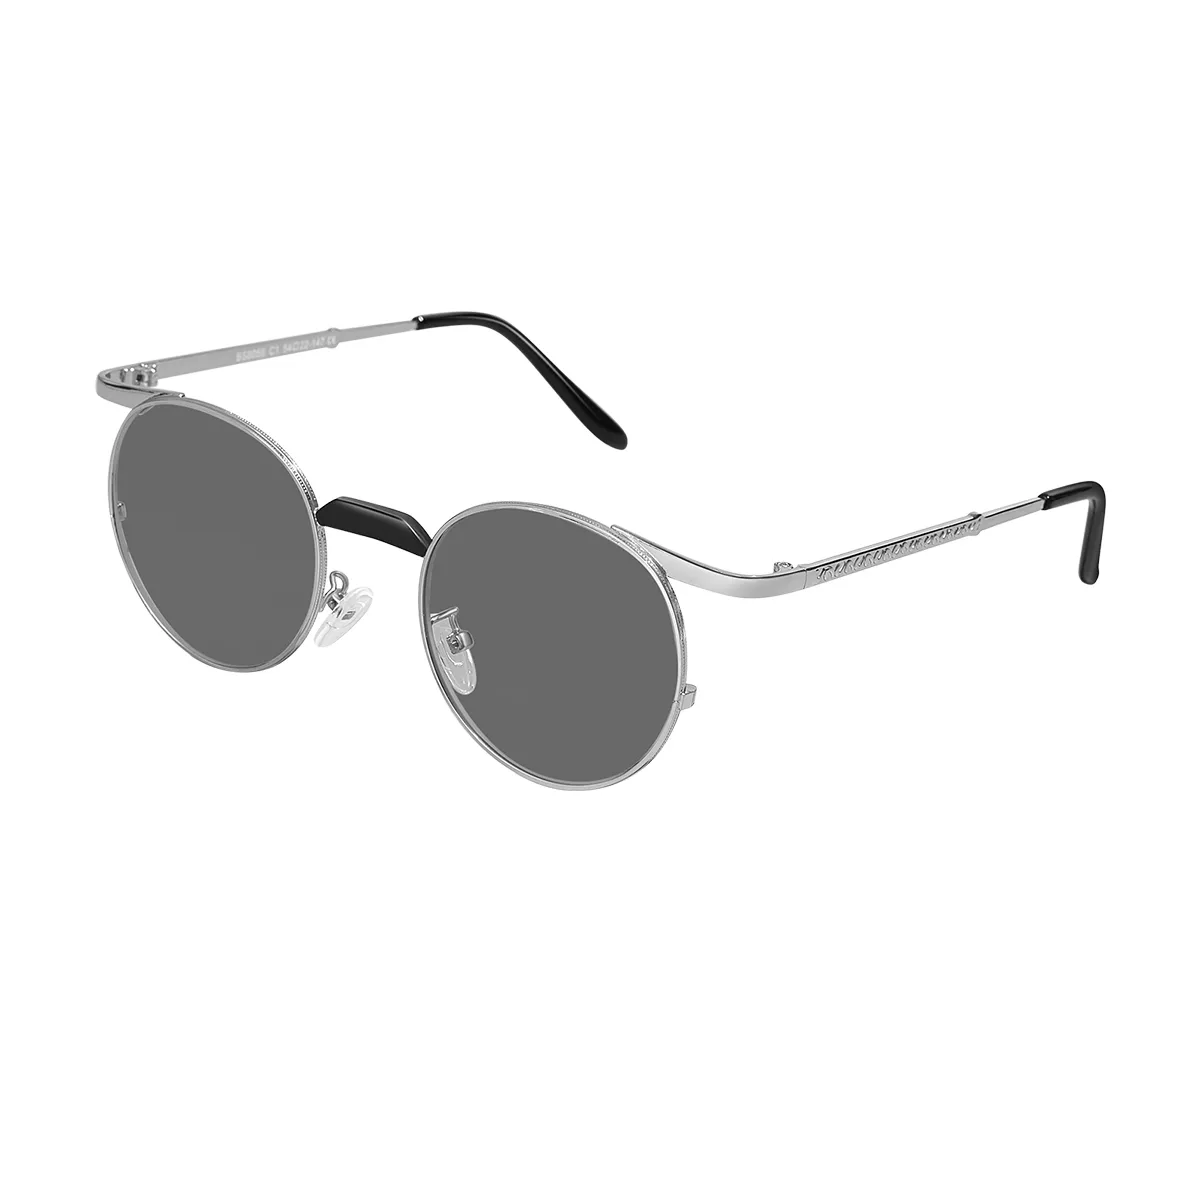 Elina - Round Silver Sunglasses for Women